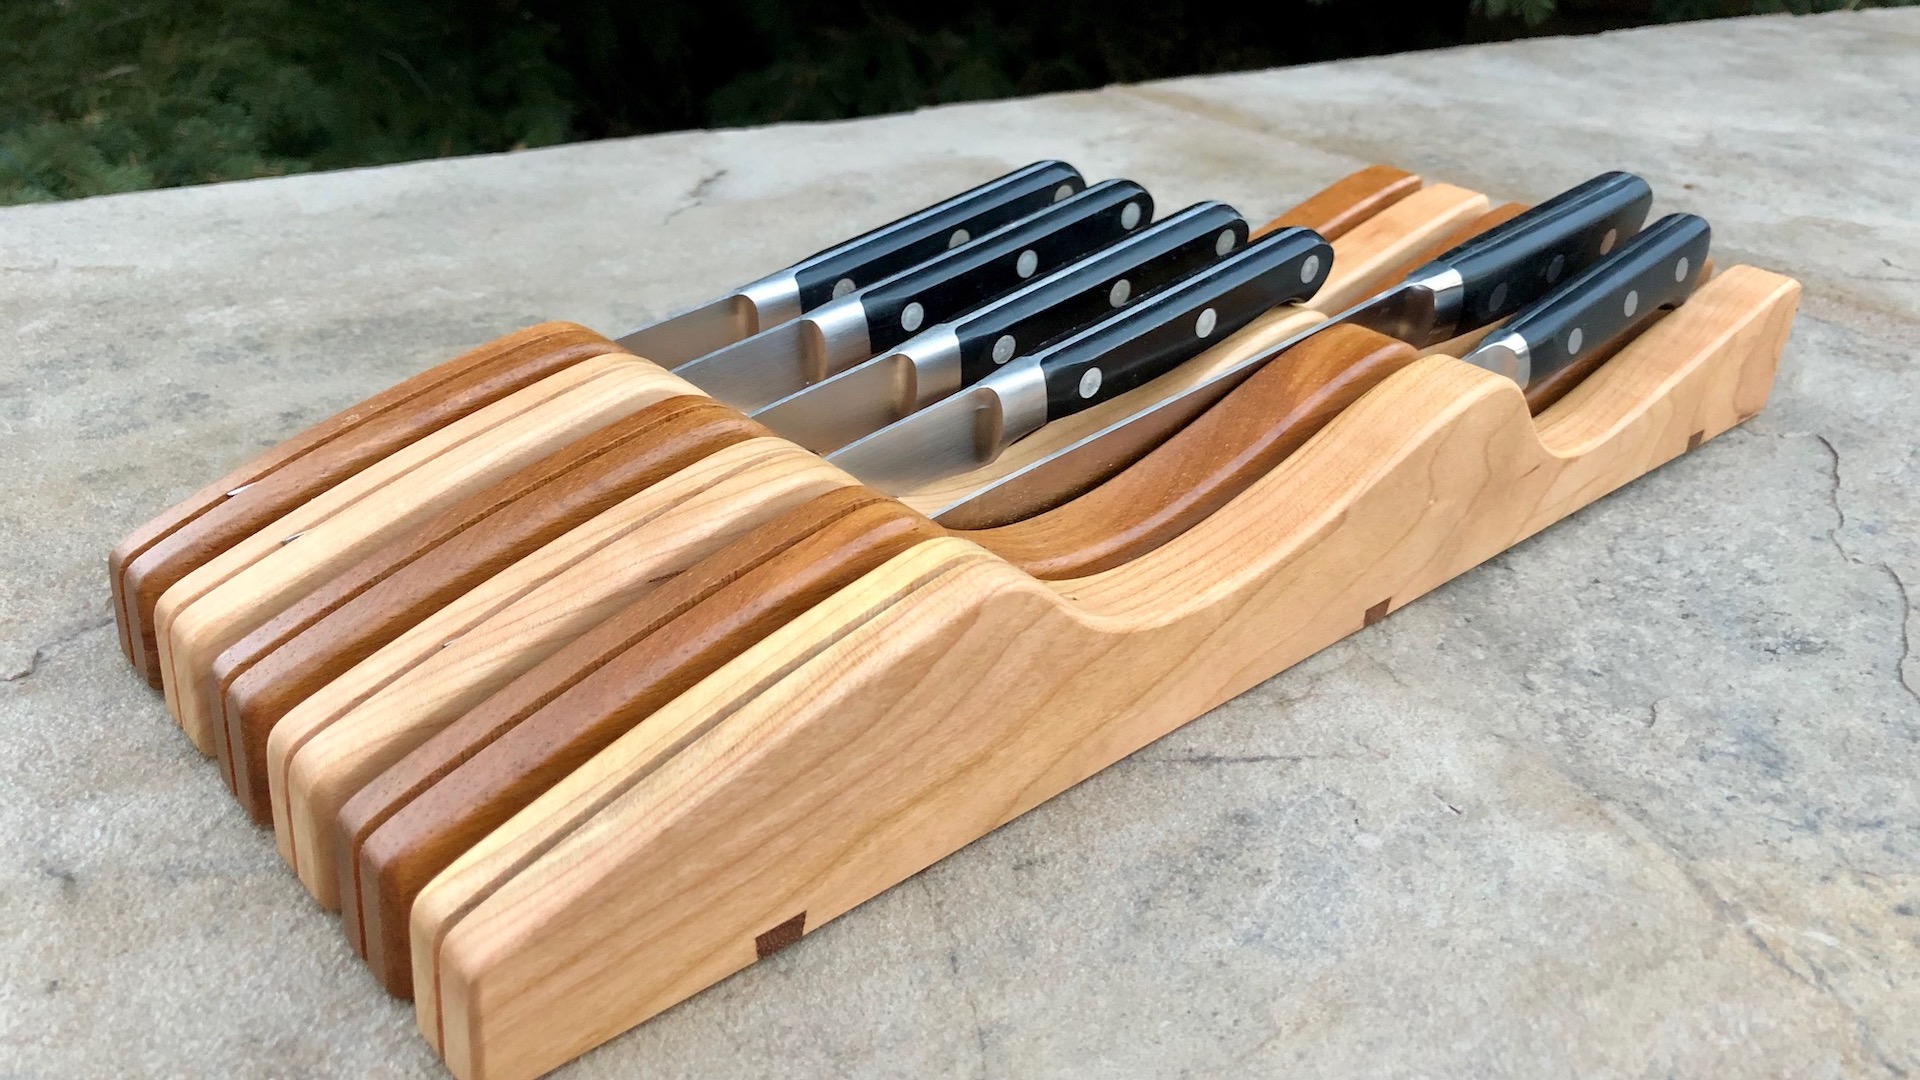 Woodworking knife block